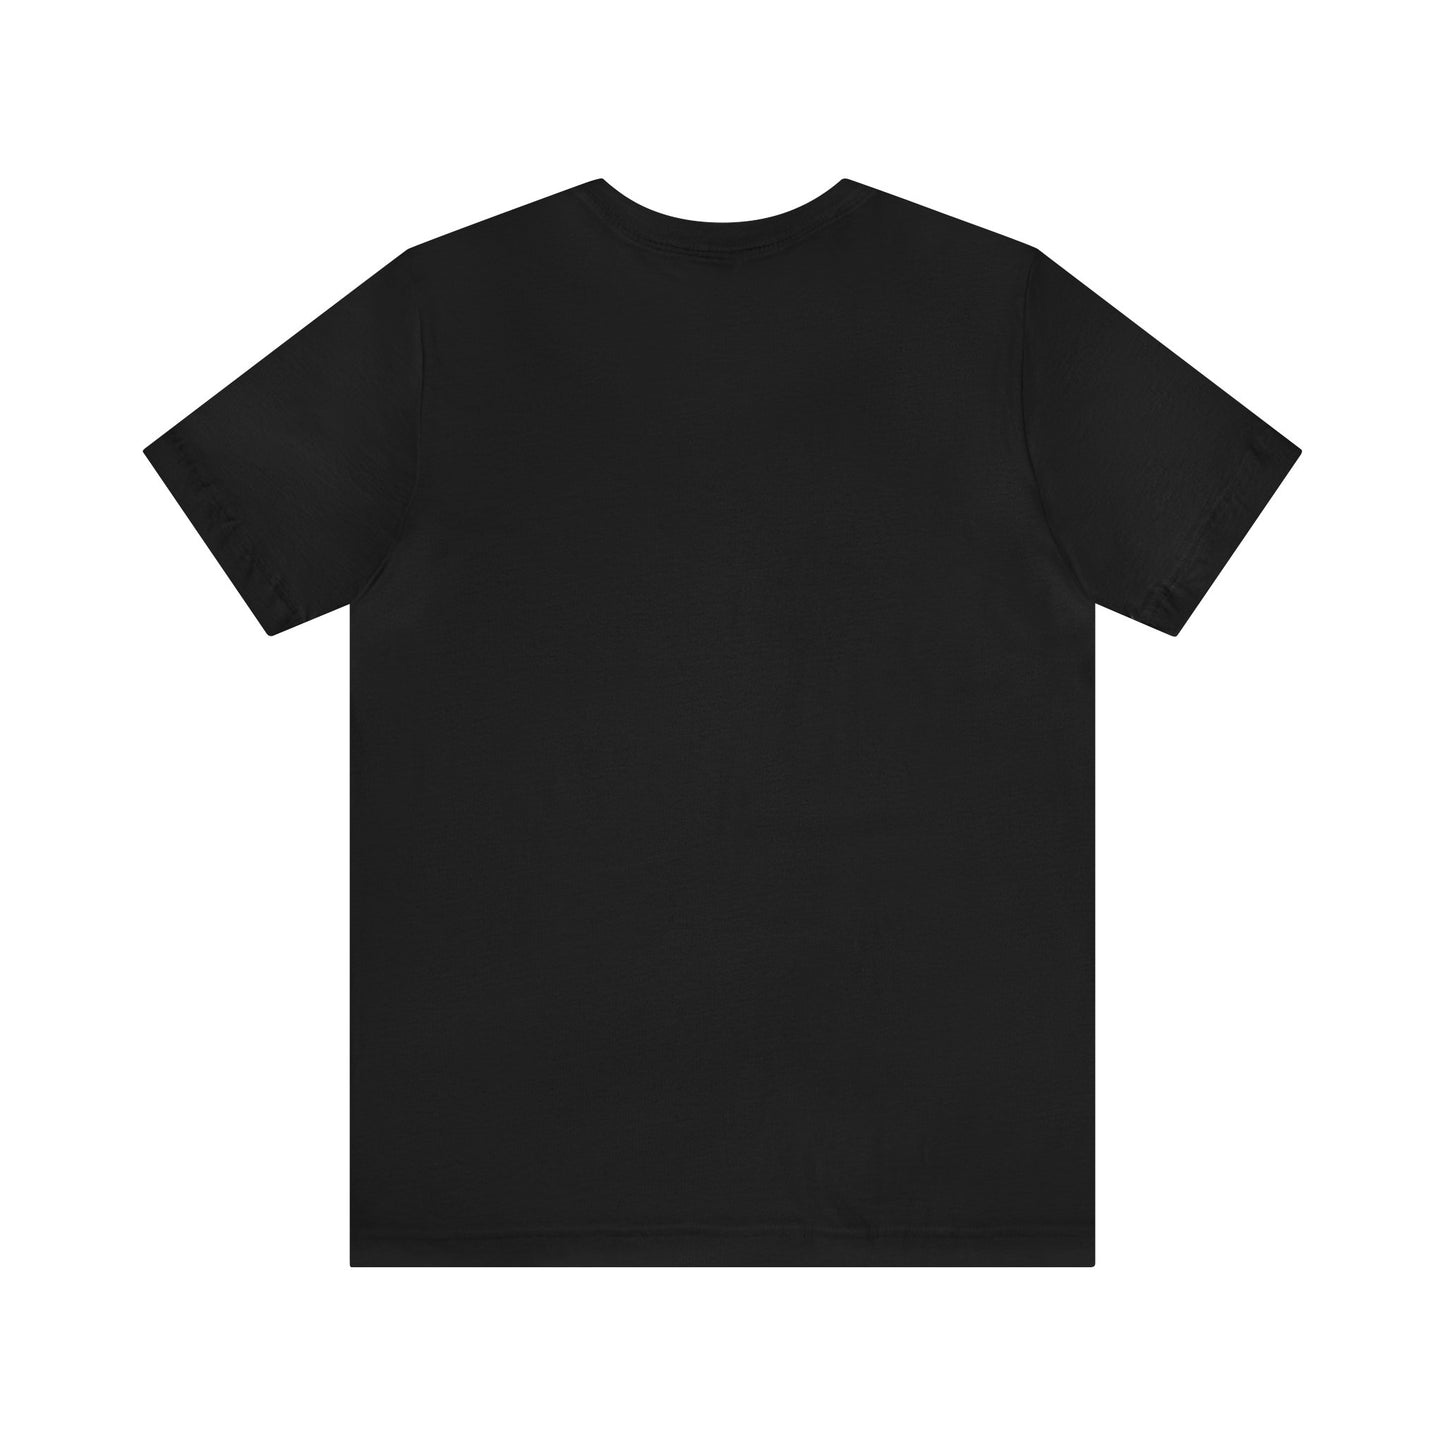 Foggy Project's Logo T-shirt Unisex Black